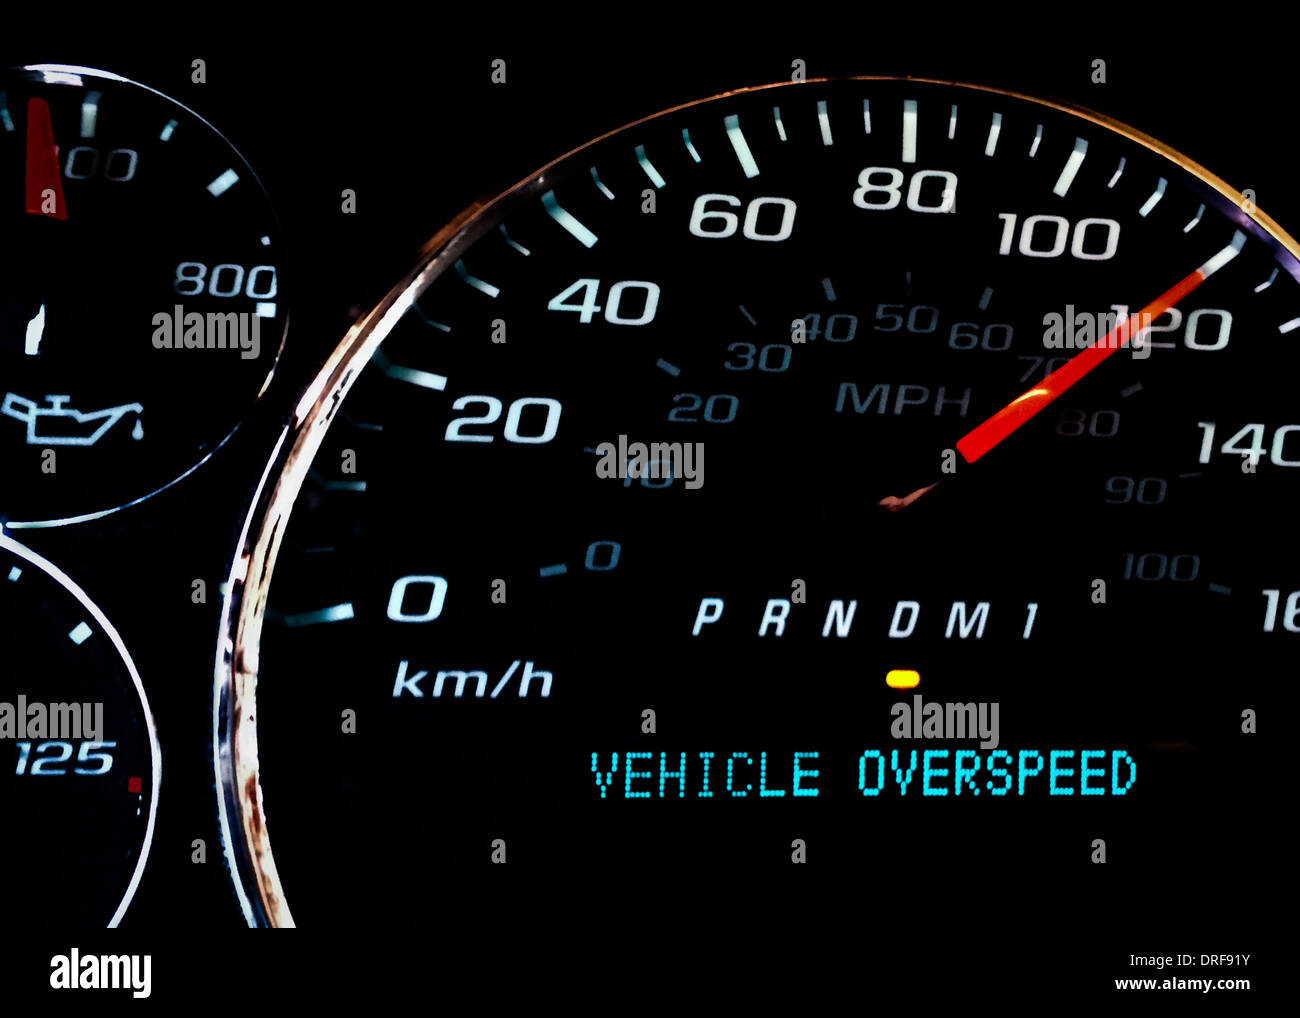 Vehicle over speed dashboard warning light Stock Photo